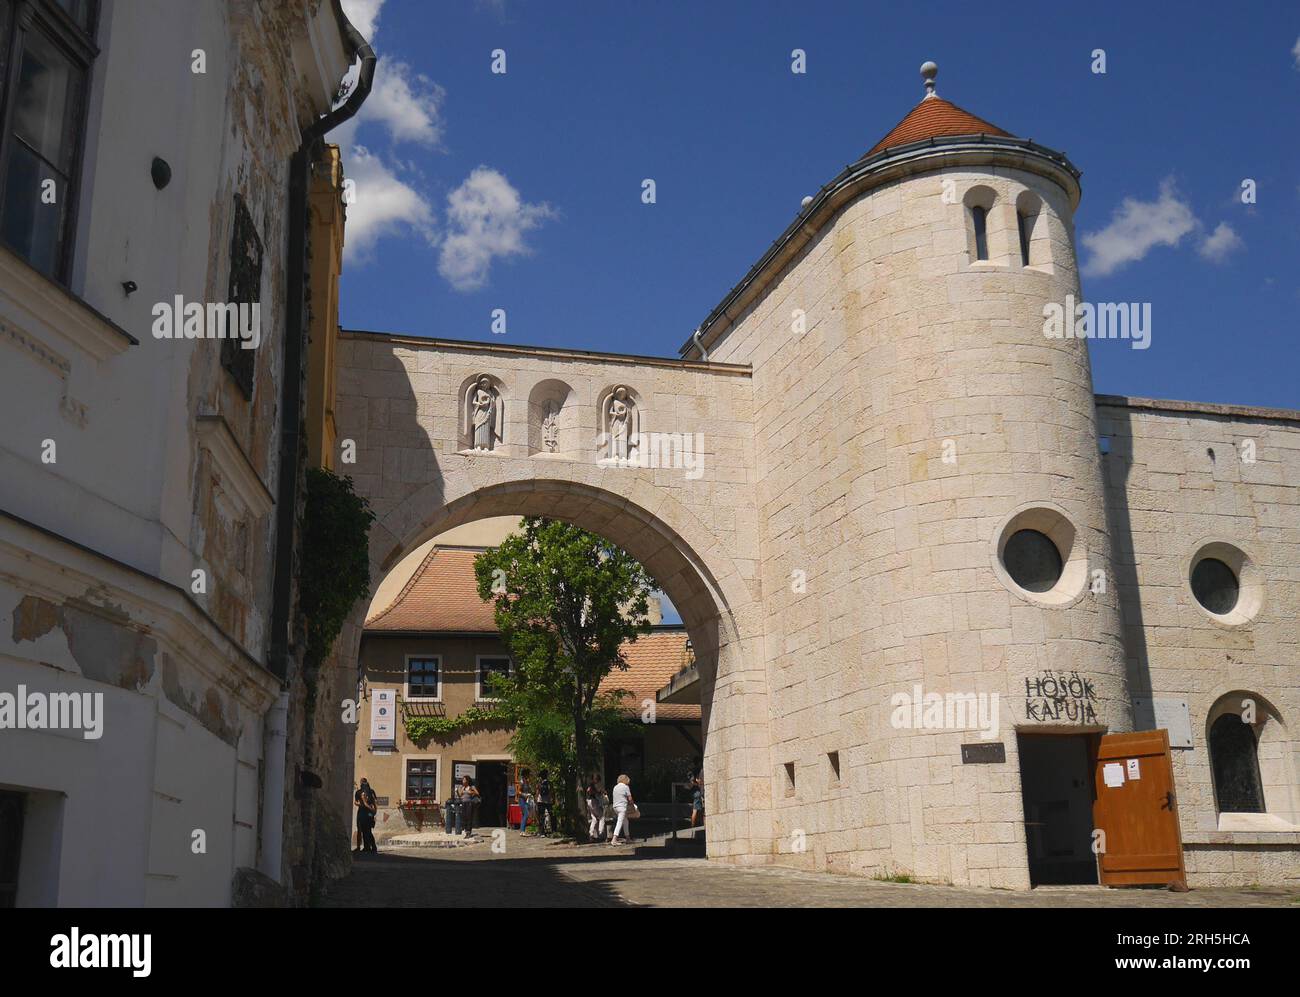 Heroes’ Gate, the entrance to the castle district, Veszprem, Hungary Stock Photo